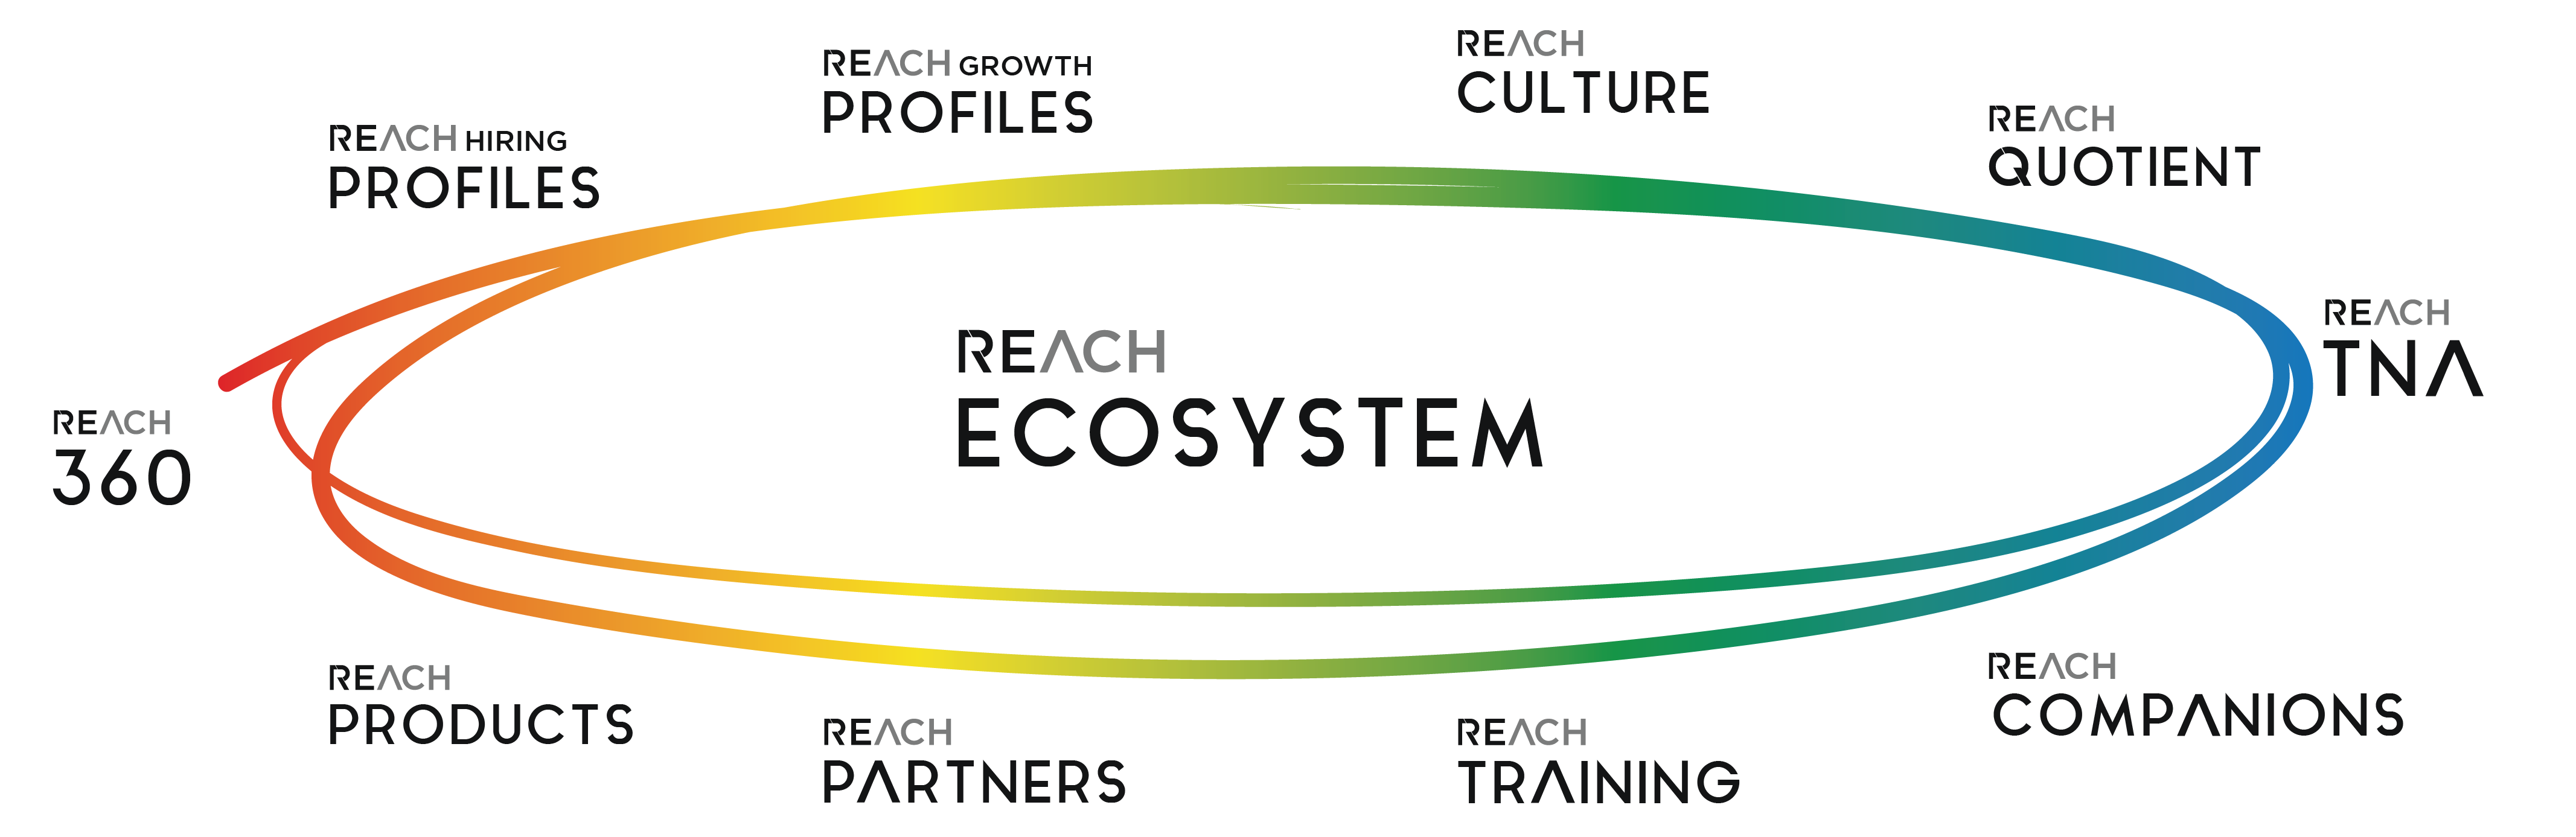 REACH Ecosystem Professional Development Calculator